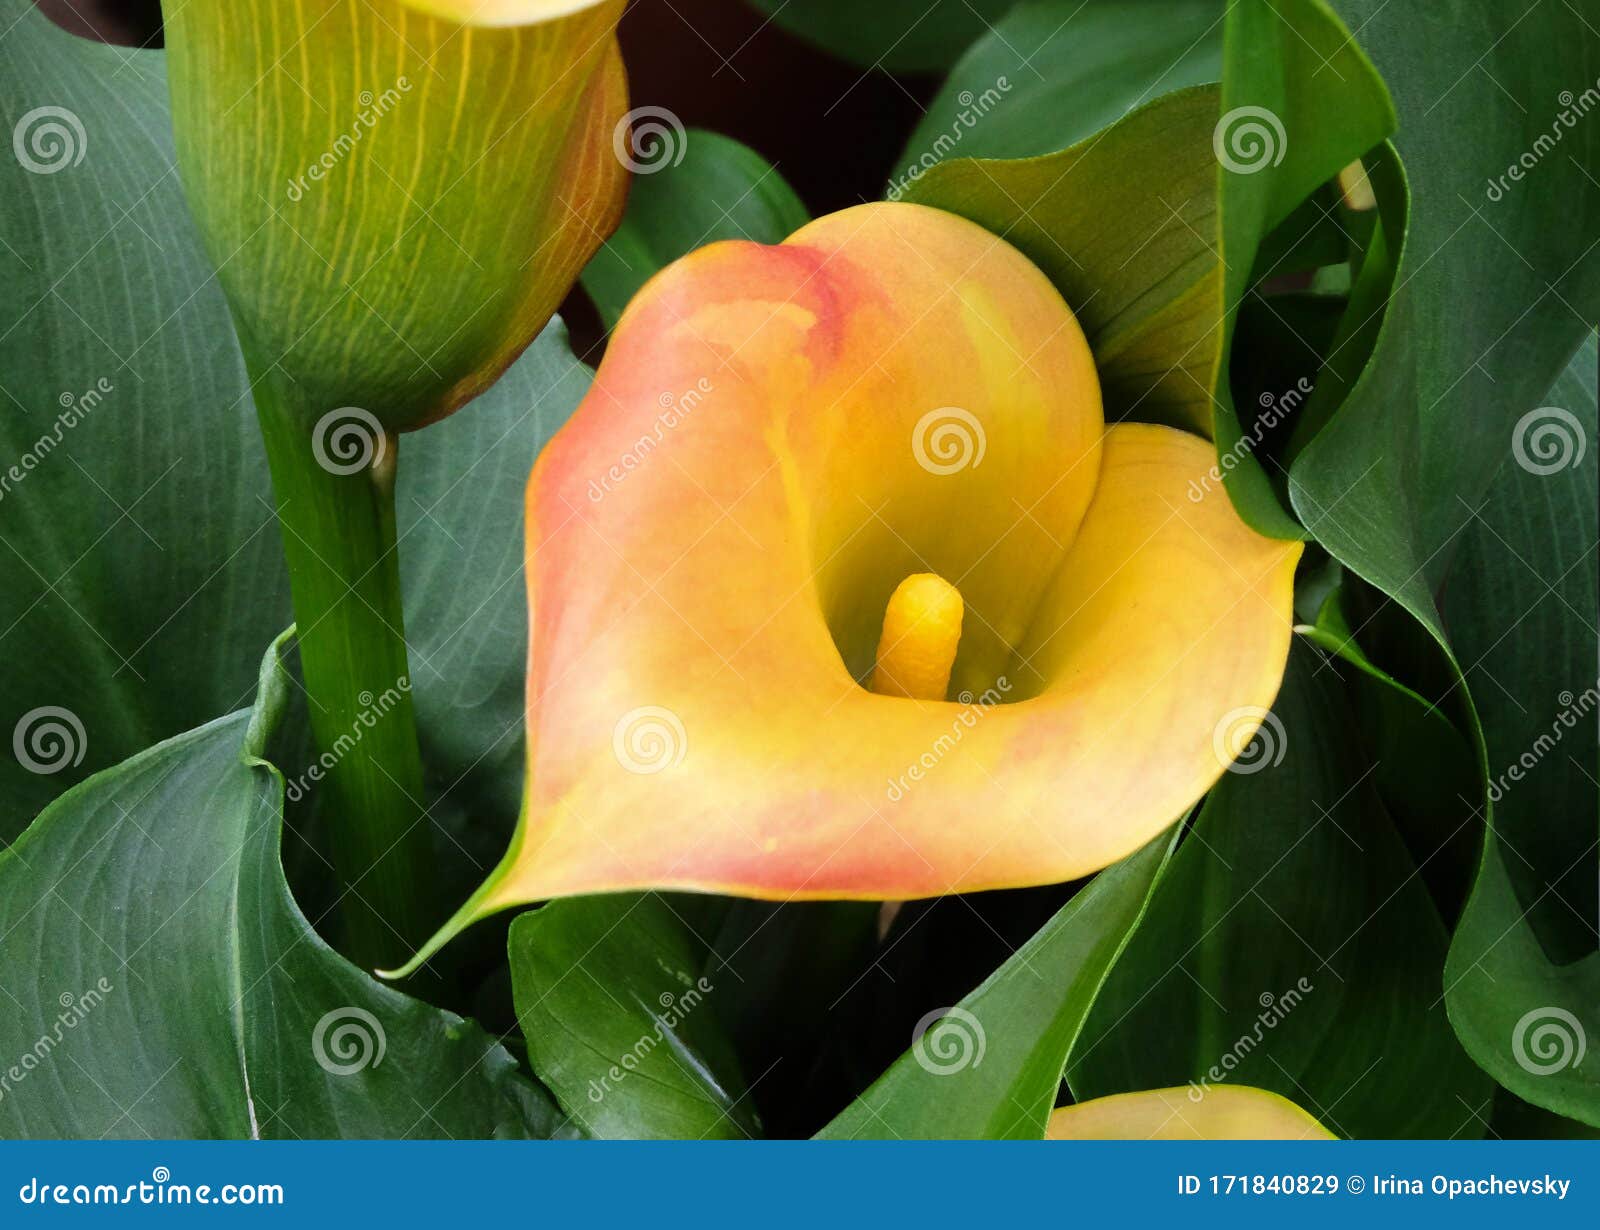 beautiful flowers of yellow calla captain amigo